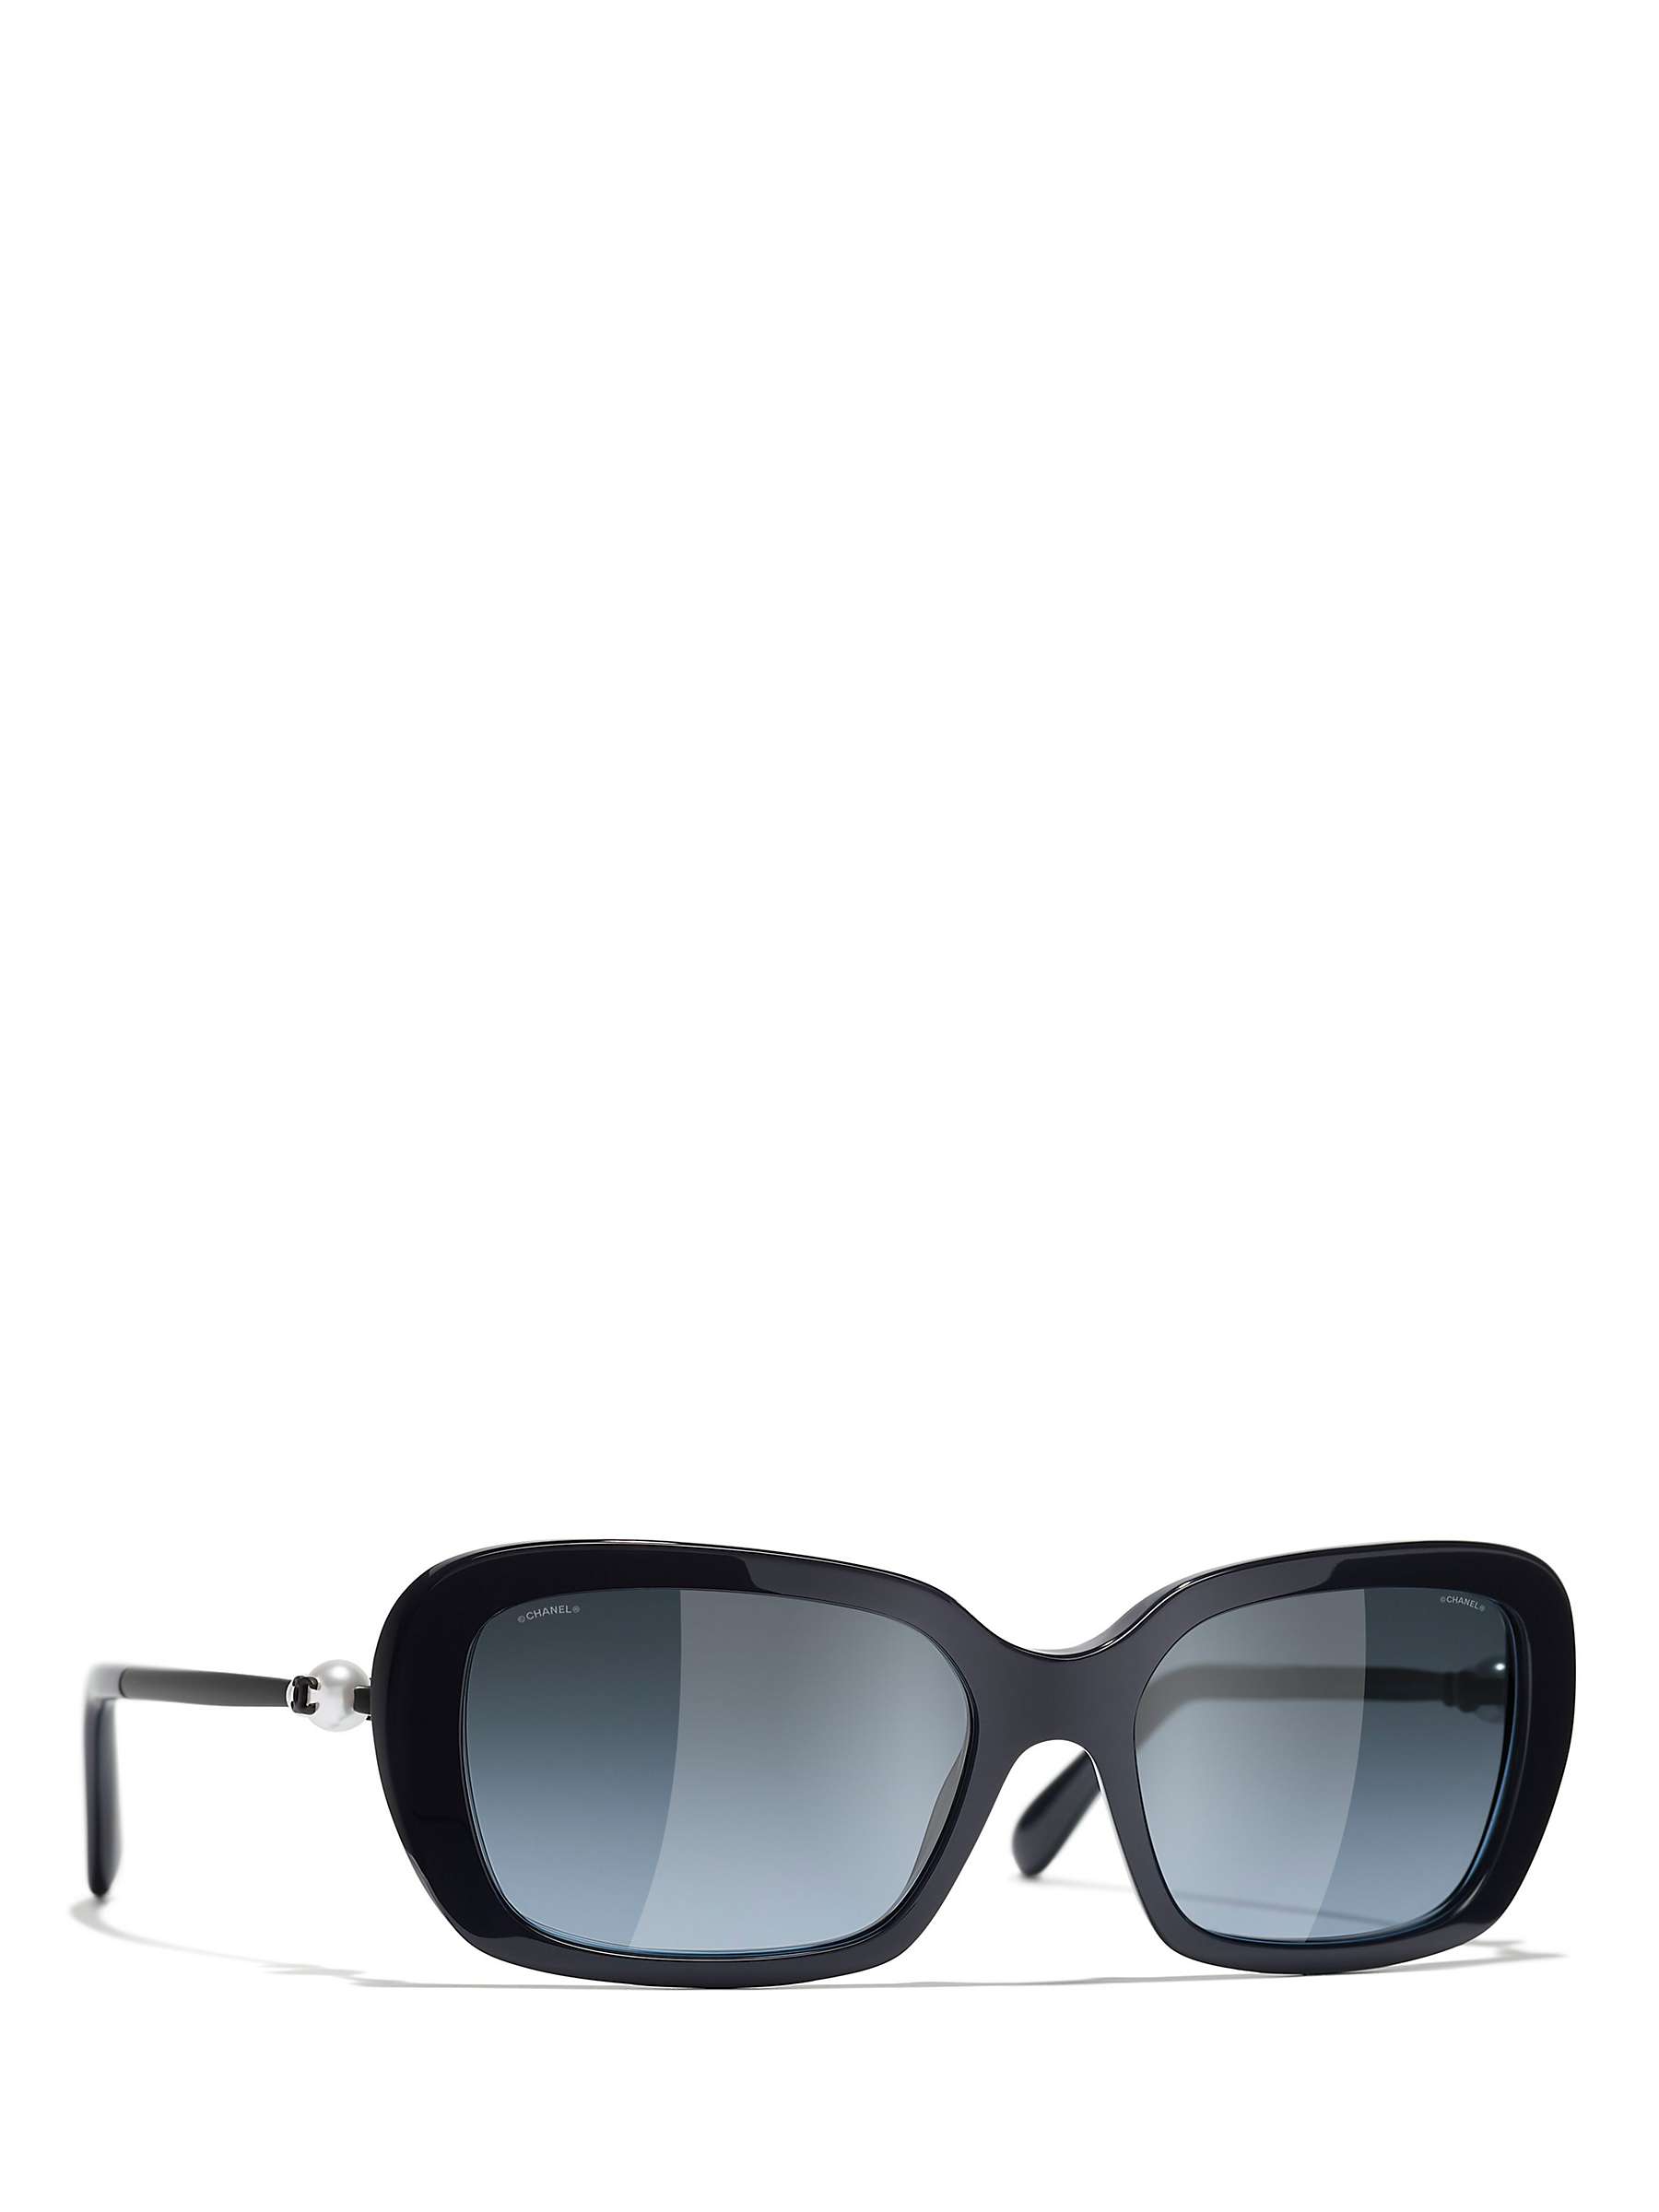 Buy CHANEL Rectangular Sunglasses CH5427H Black/Blue Gradient Online at johnlewis.com